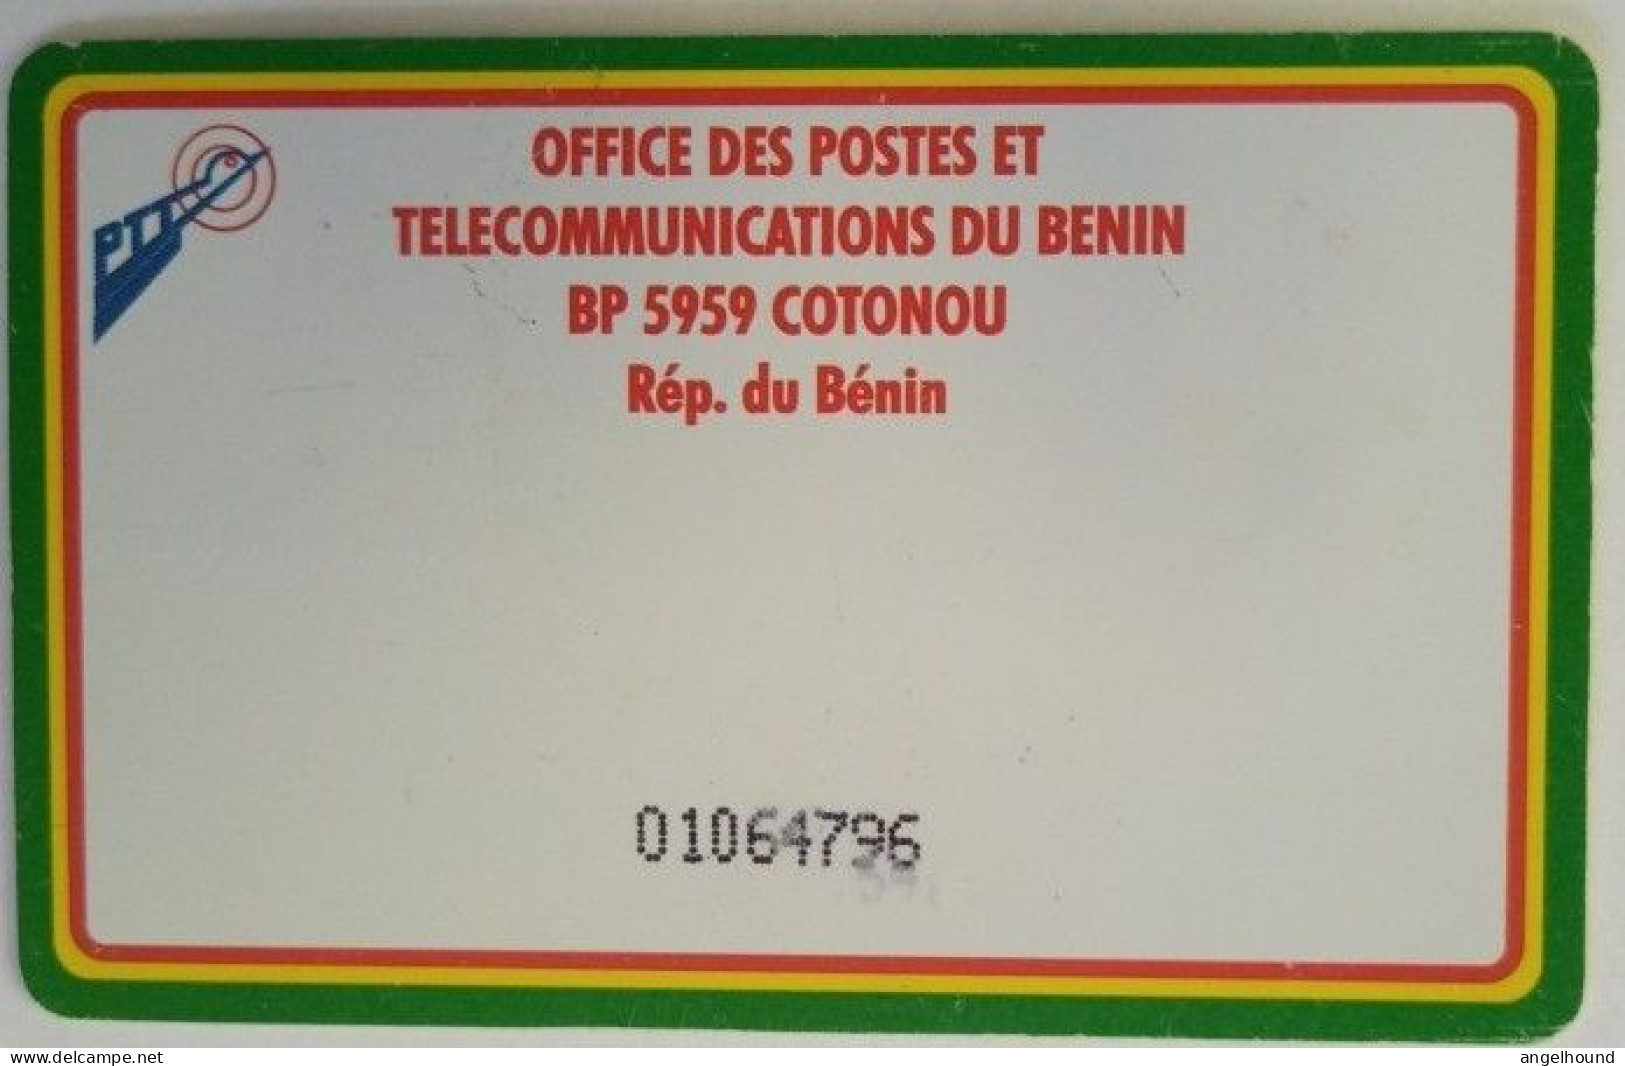 Benin 30 Units Chip Card - Conference A Trois  ( White Reverse ) - Benin